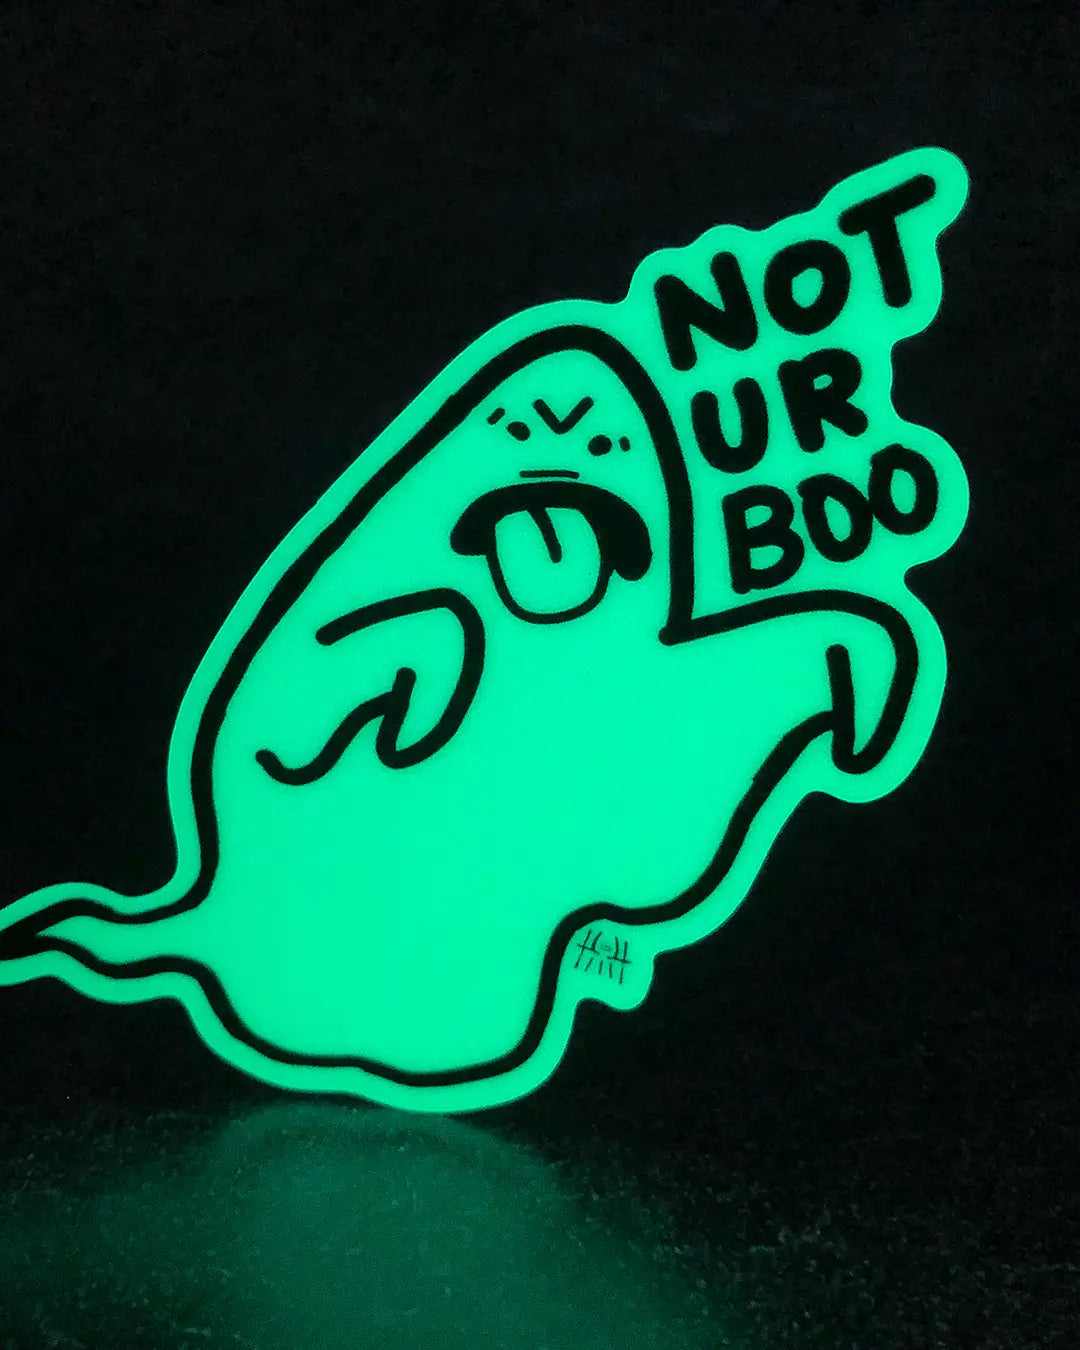 Glow in the dark - Illuminate your art - StickerApp